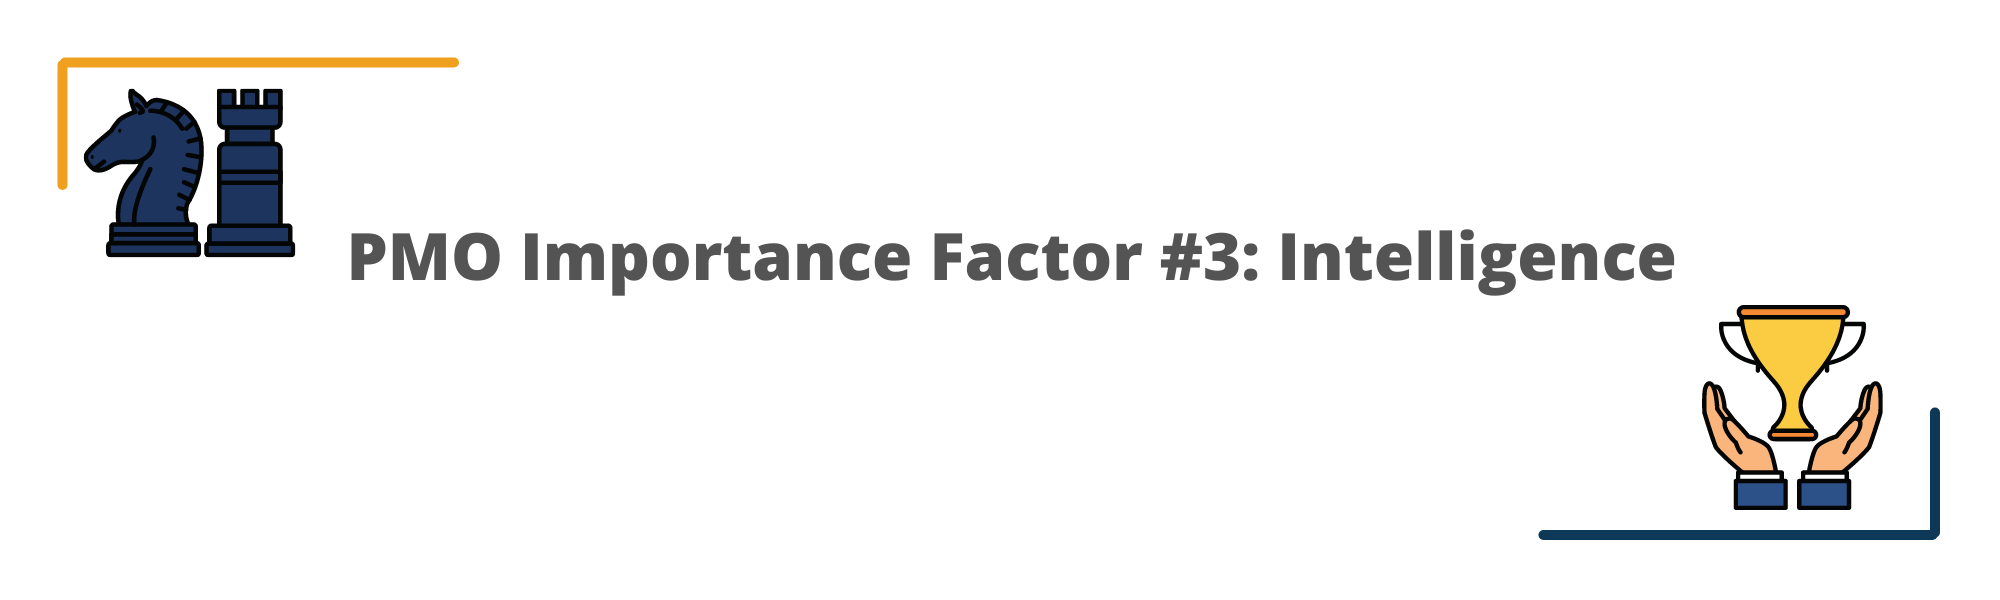 PMO Importance Factor #3: Intelligence